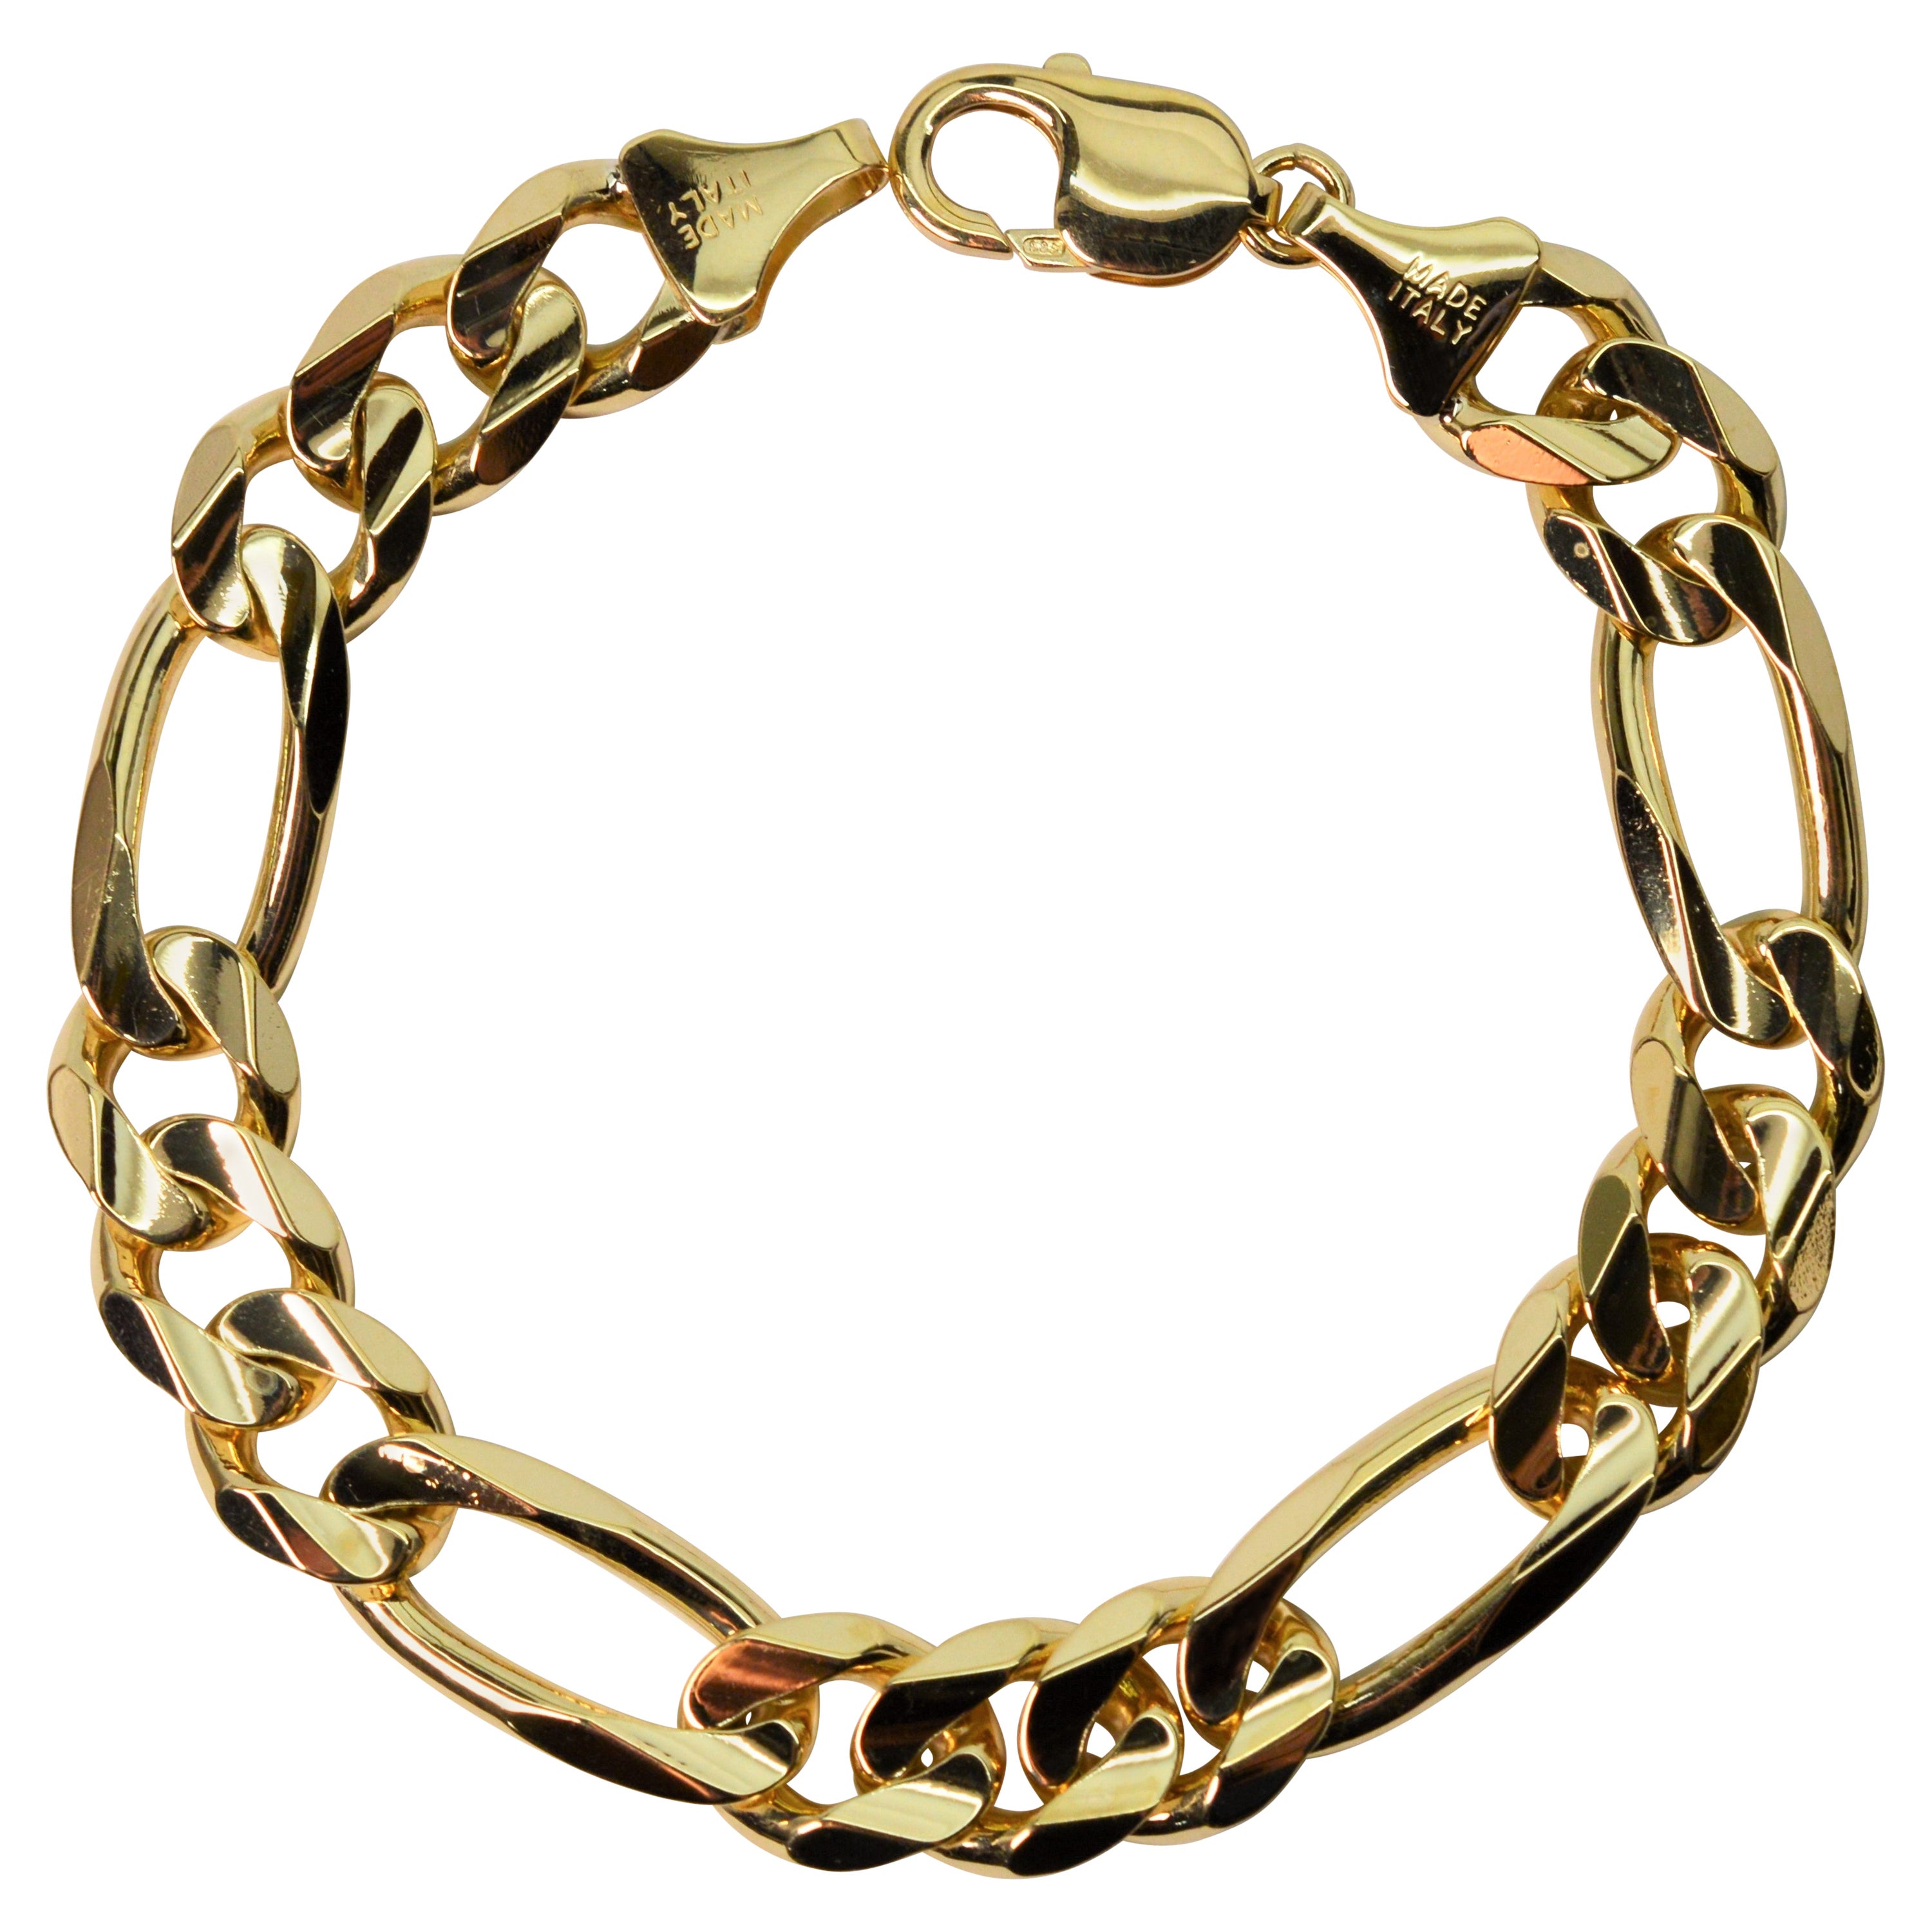 Italian Gold Woven Horse Bangle Bracelet in 14k Gold Vermeil - Macy's